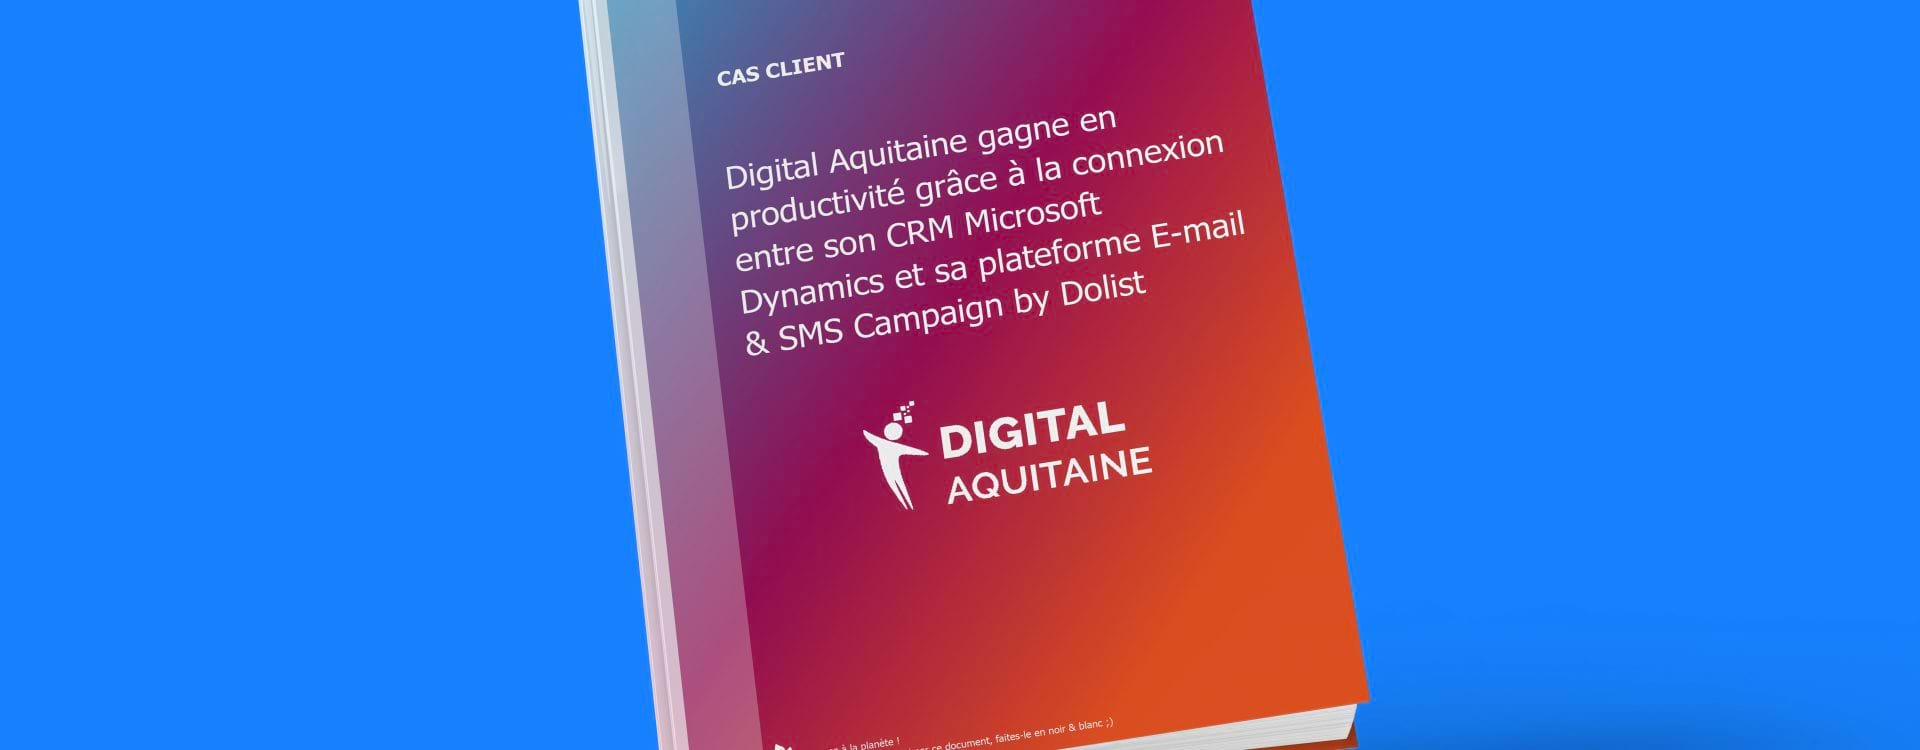 Cas client Digital Aquitaine